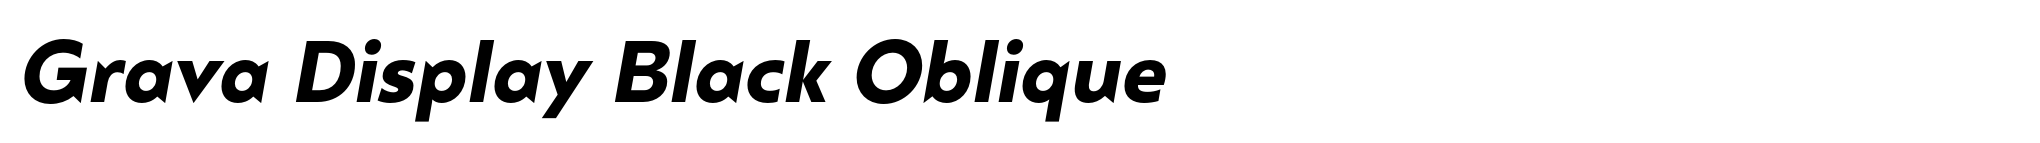 Grava Display Black Oblique image